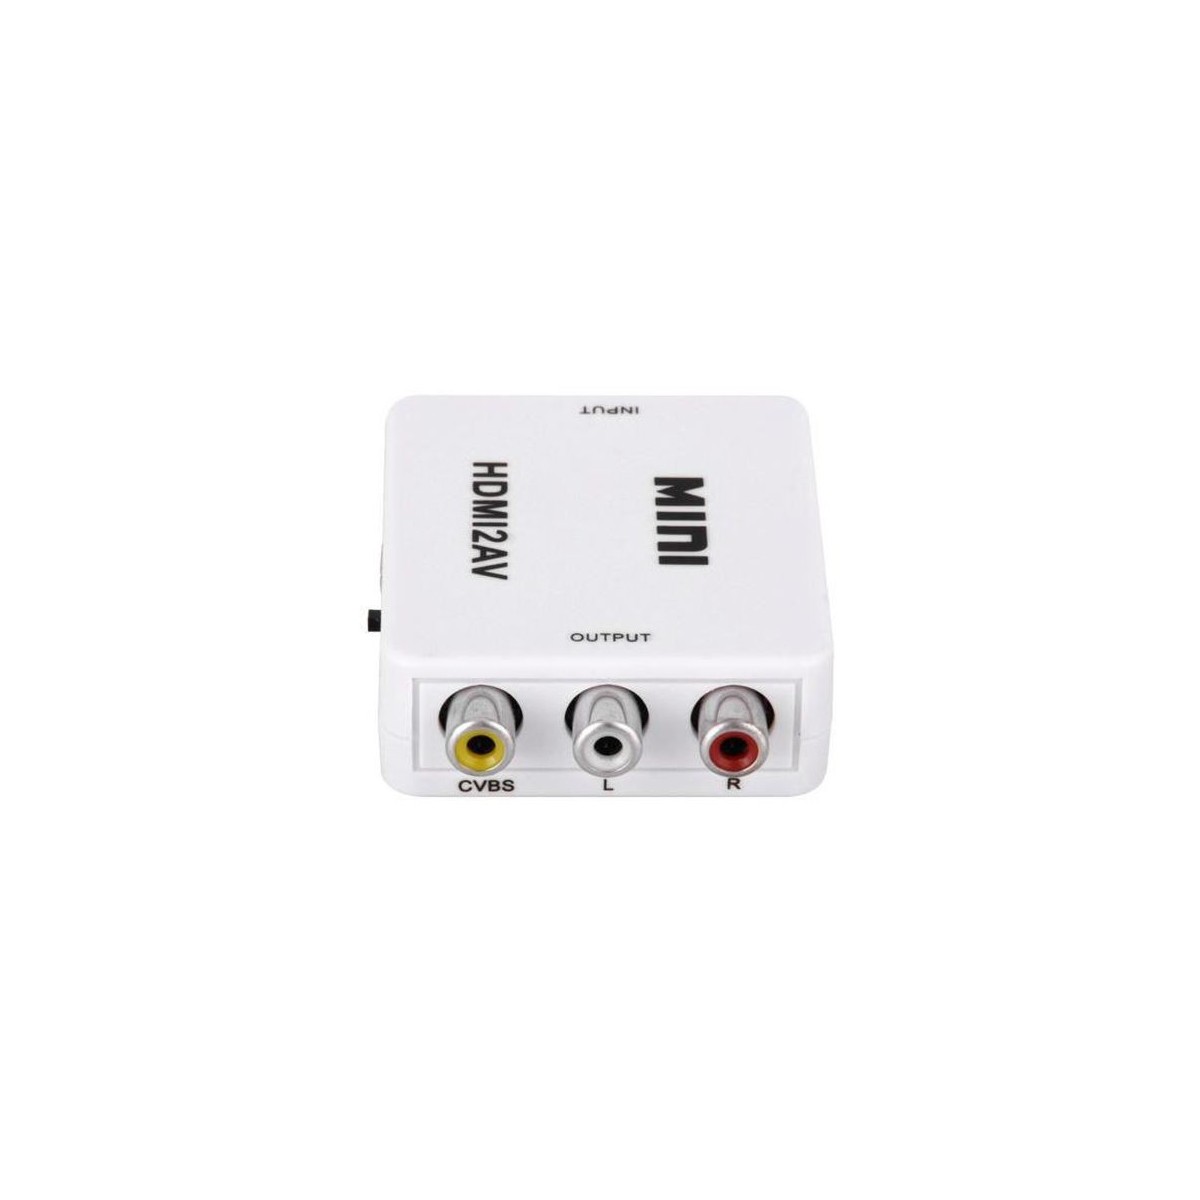 Adaptateur HDMI vers RCA vidéo audio adaptateur convertisseur HDMI2AV Blanc